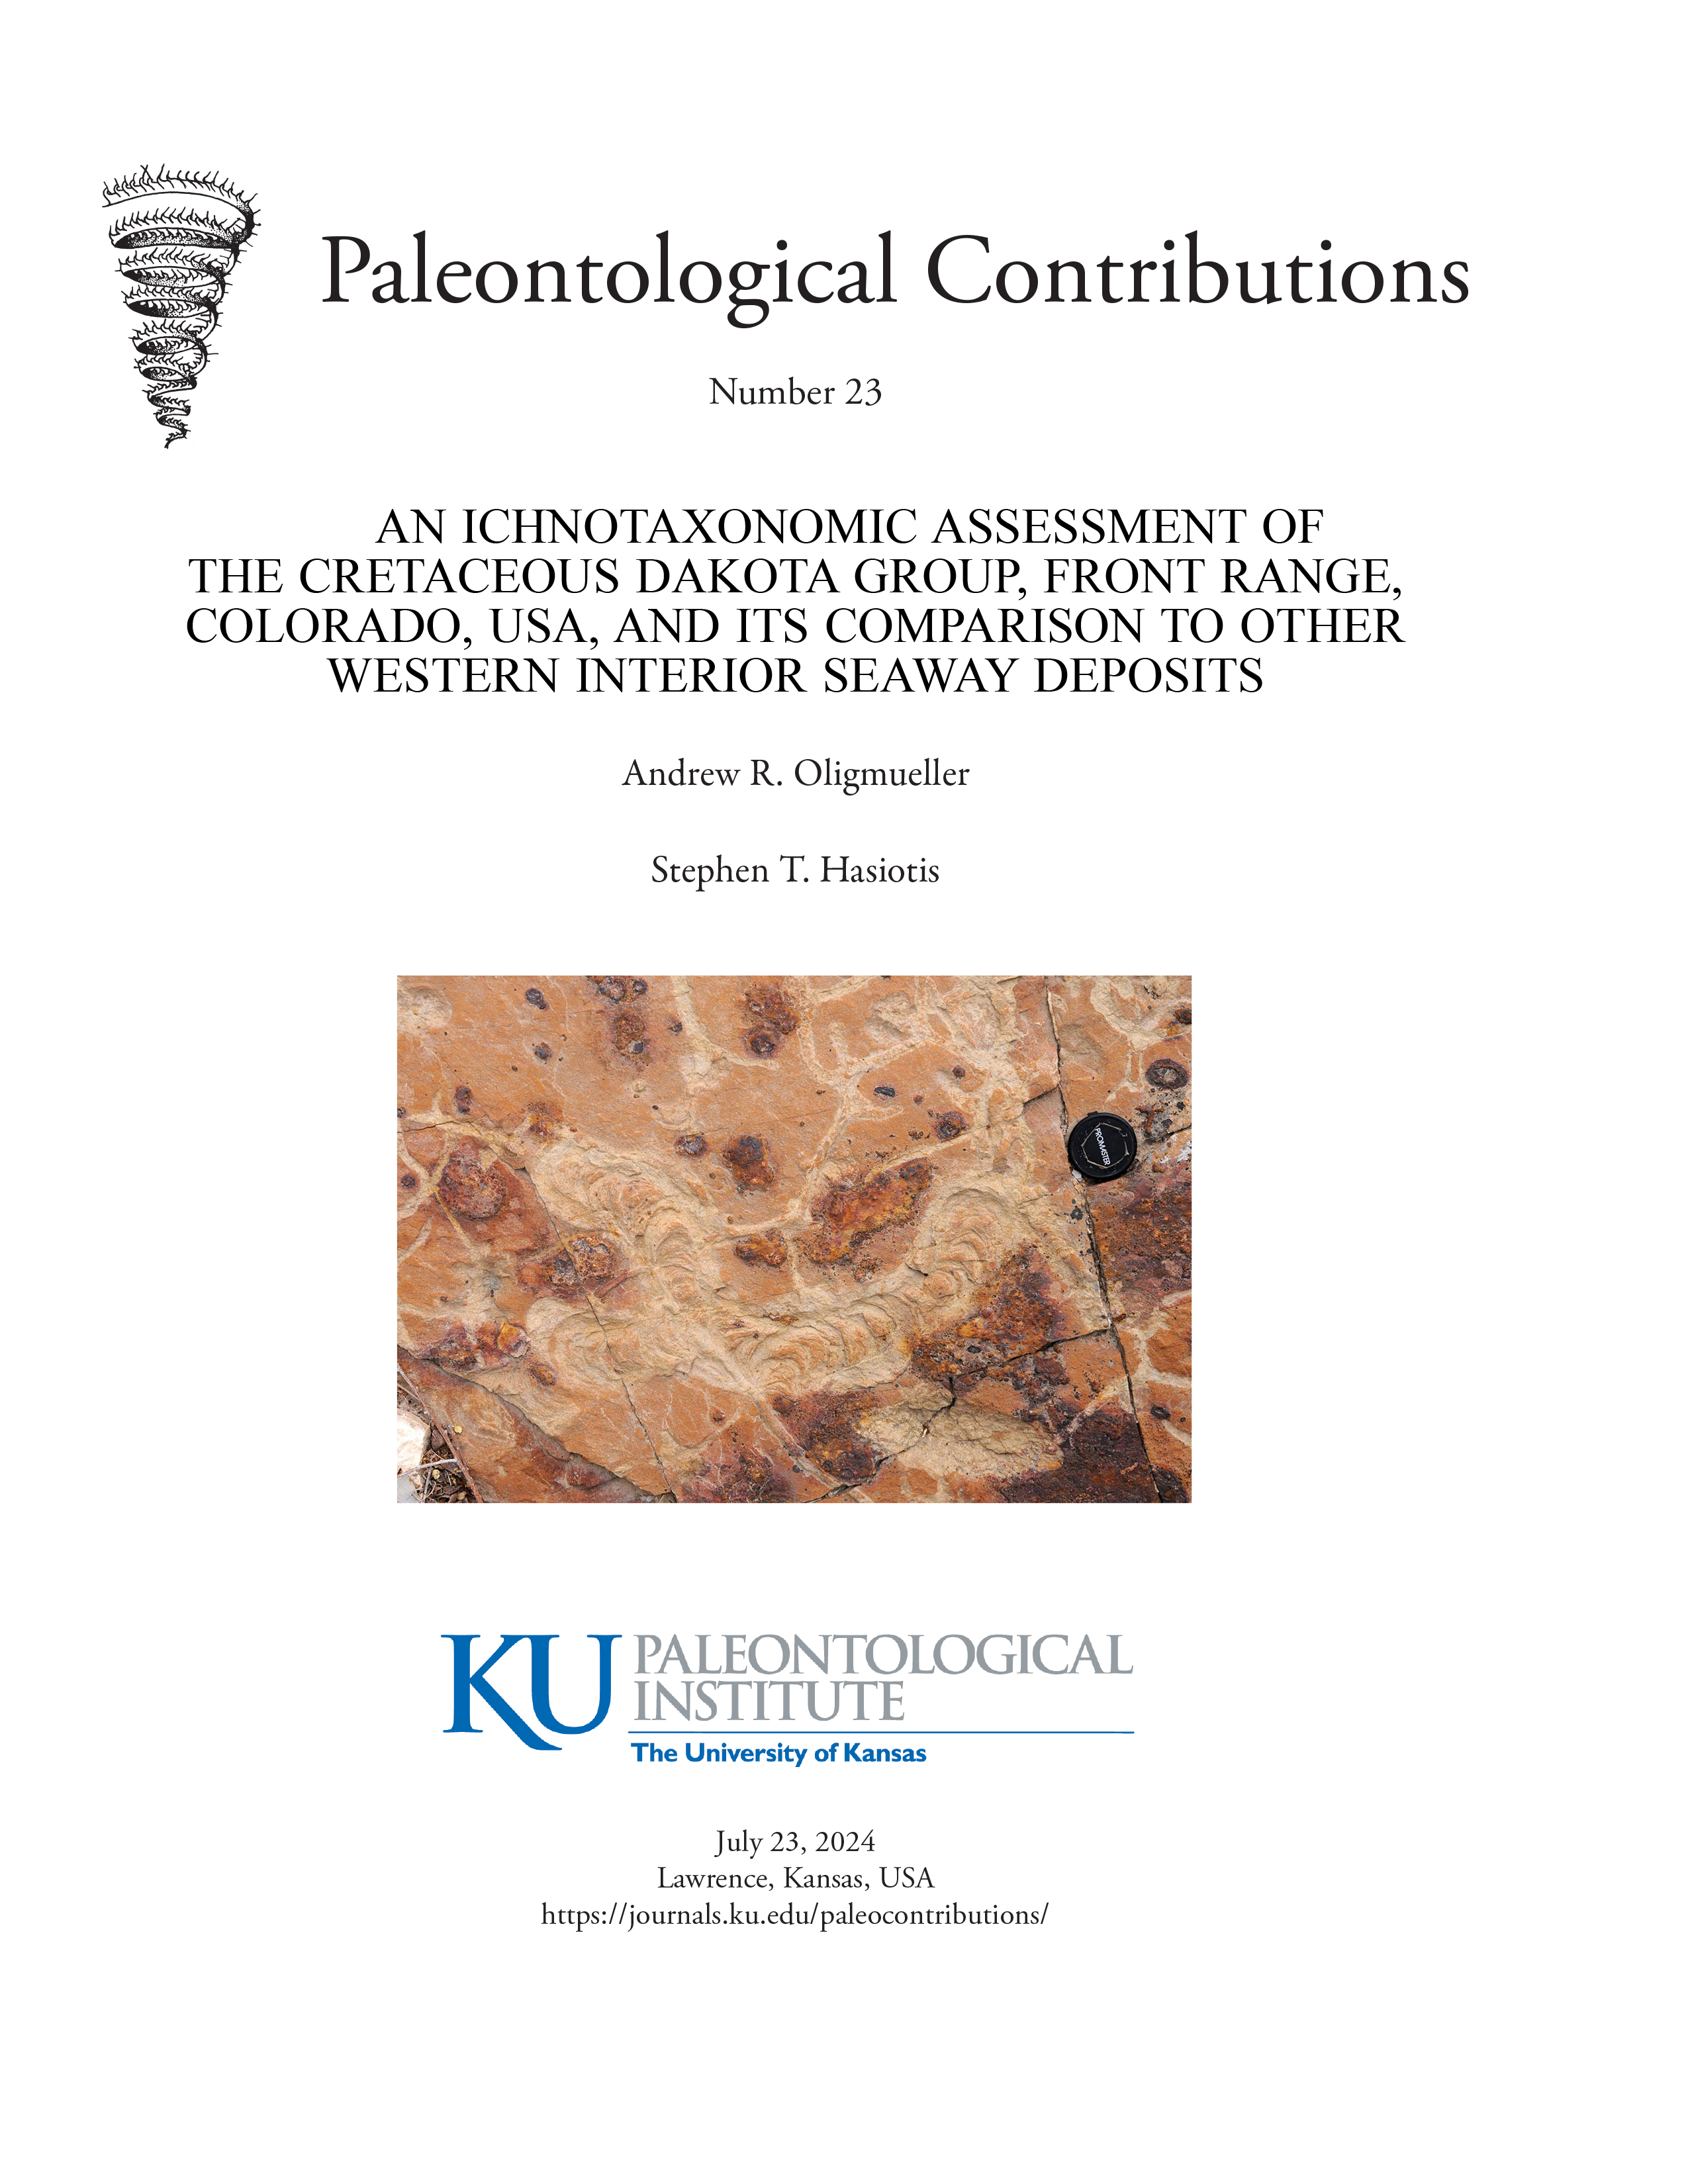 Paleontological Contributions, number 23